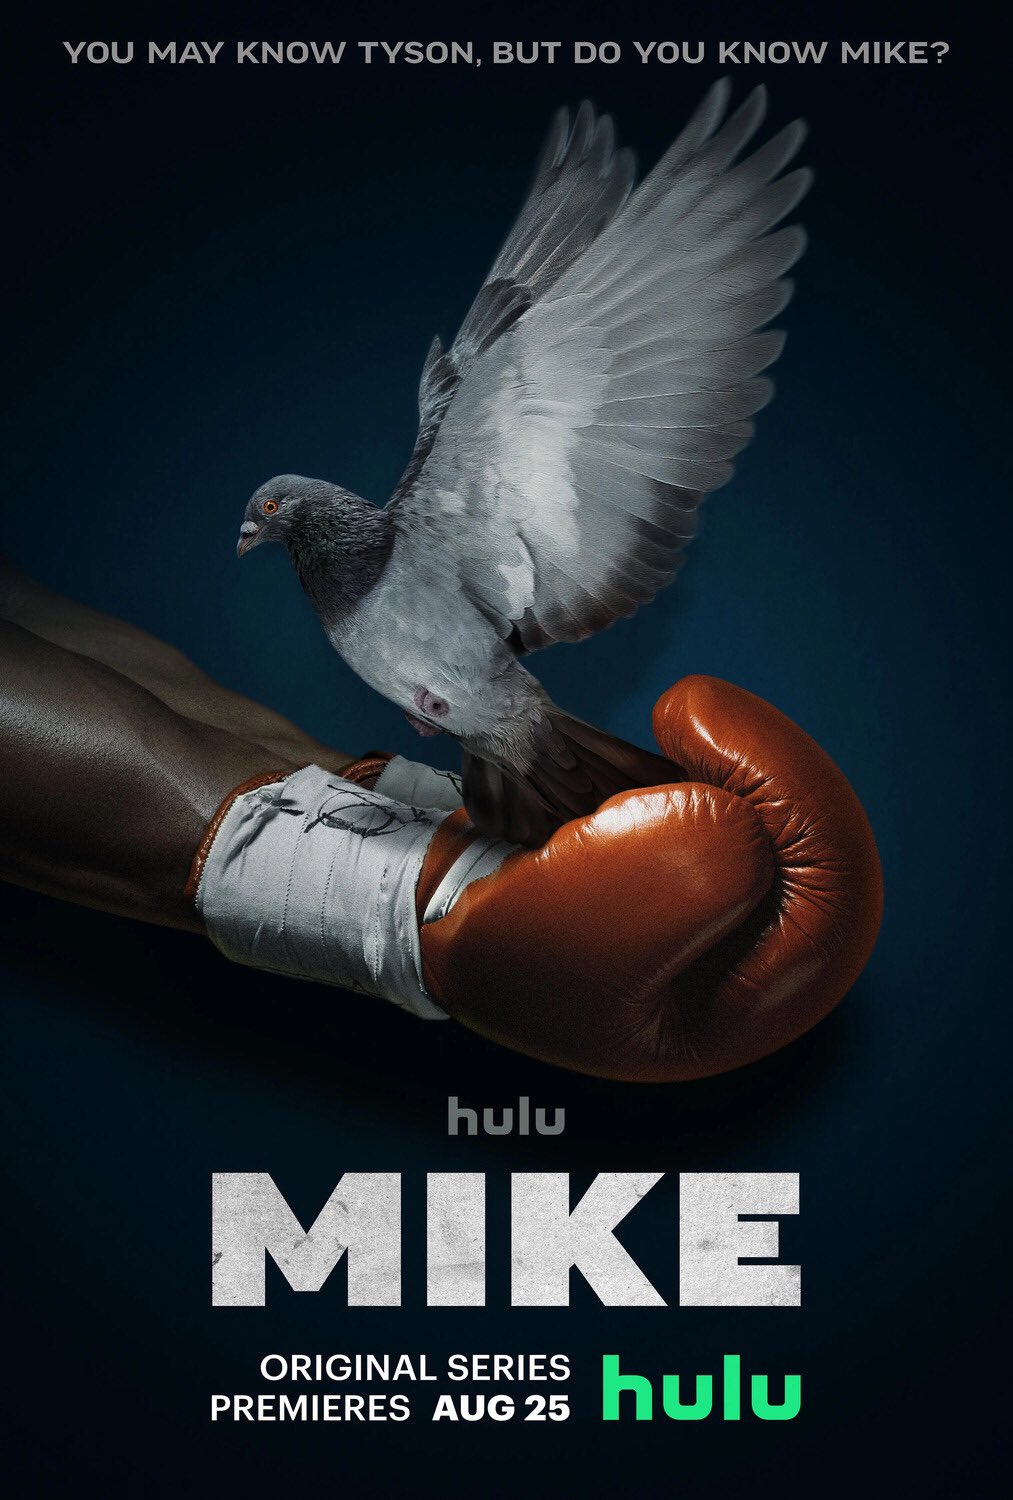 Is Mike (2022) on Hulu